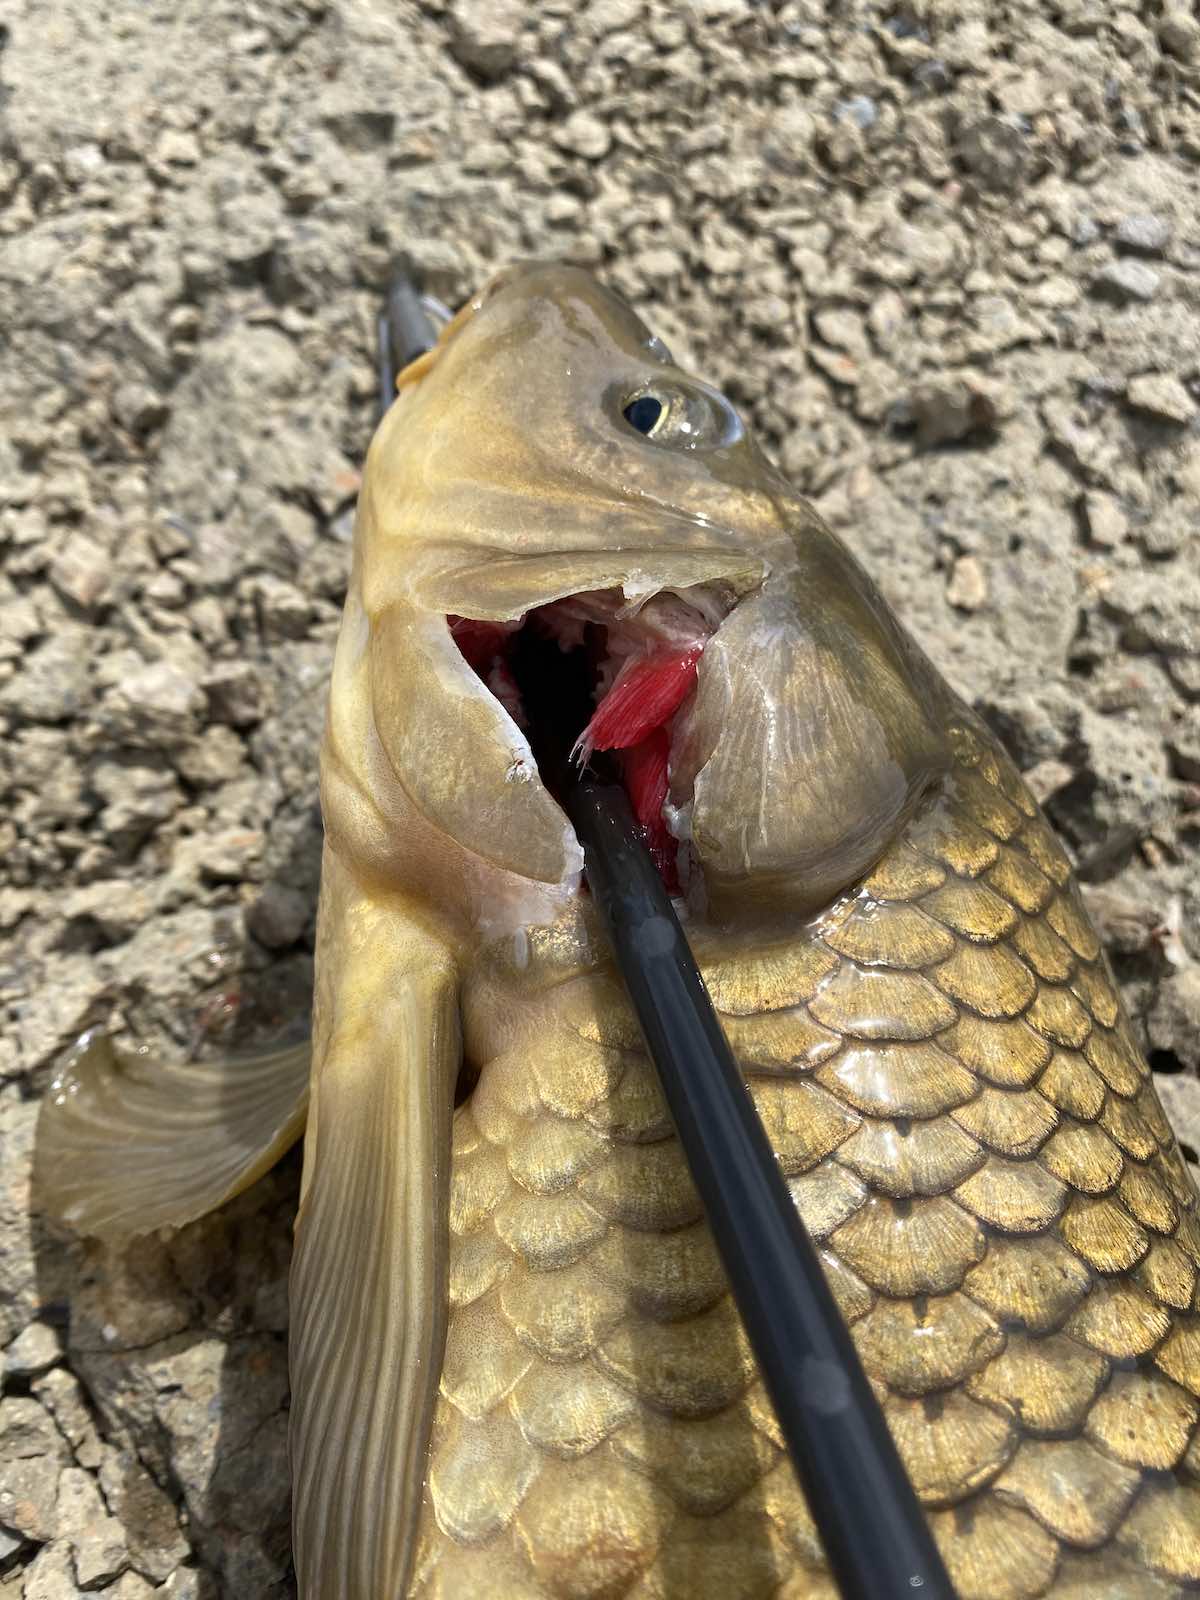 Common carp shot through gill plate with bowfishing arrow